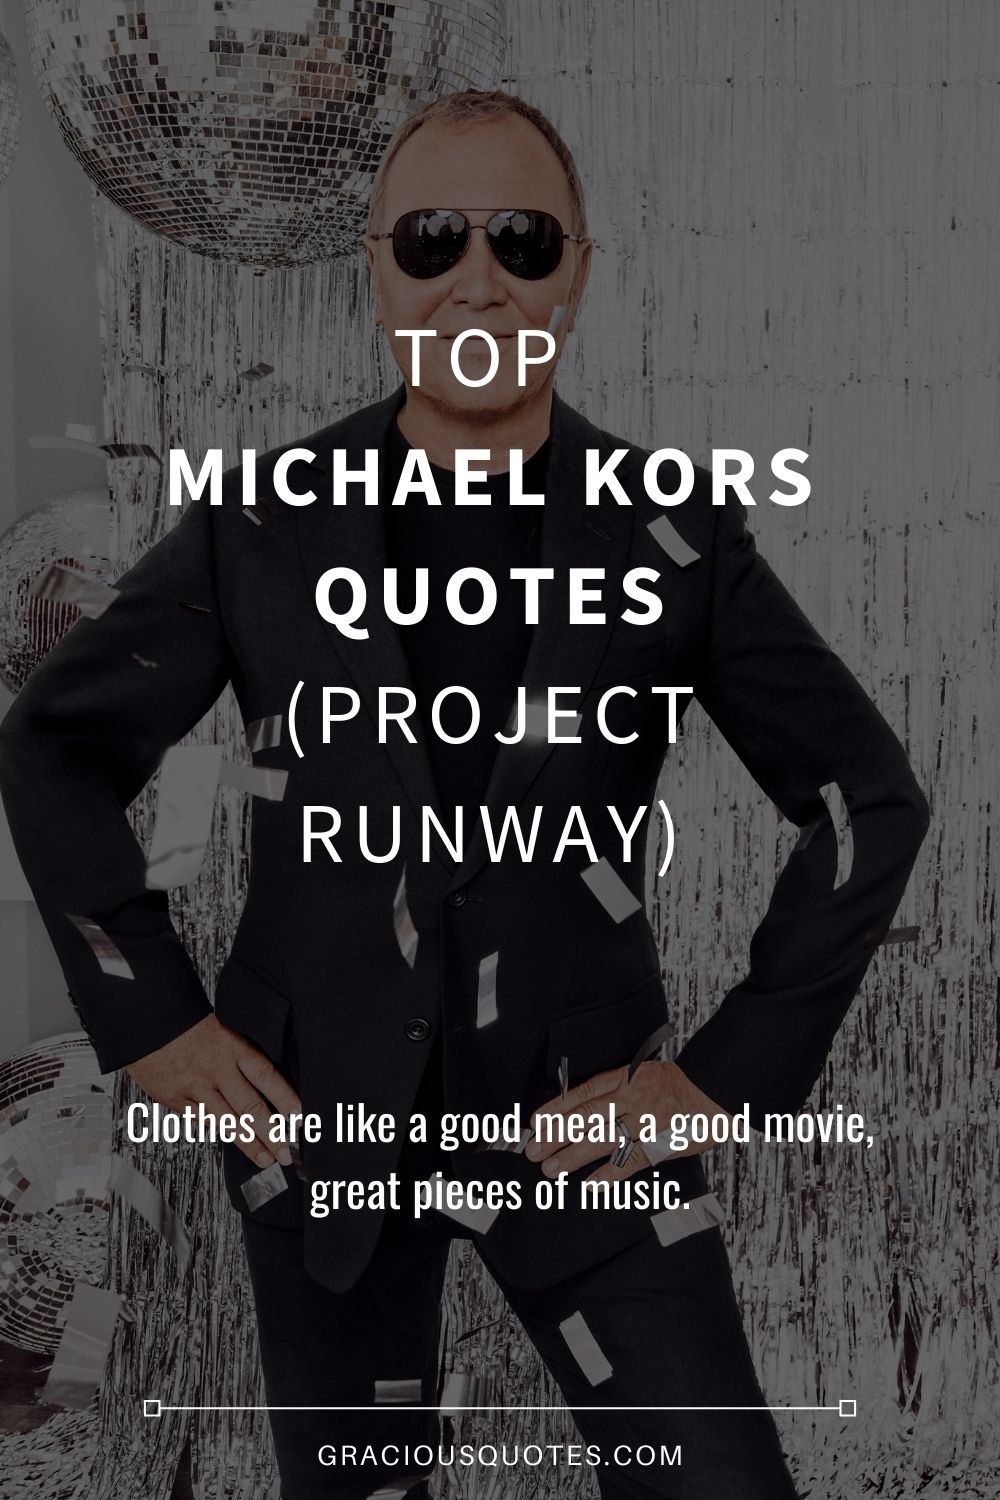 Top Michael Kors Quotes (PROJECT RUNWAY) - Gracious Quotes